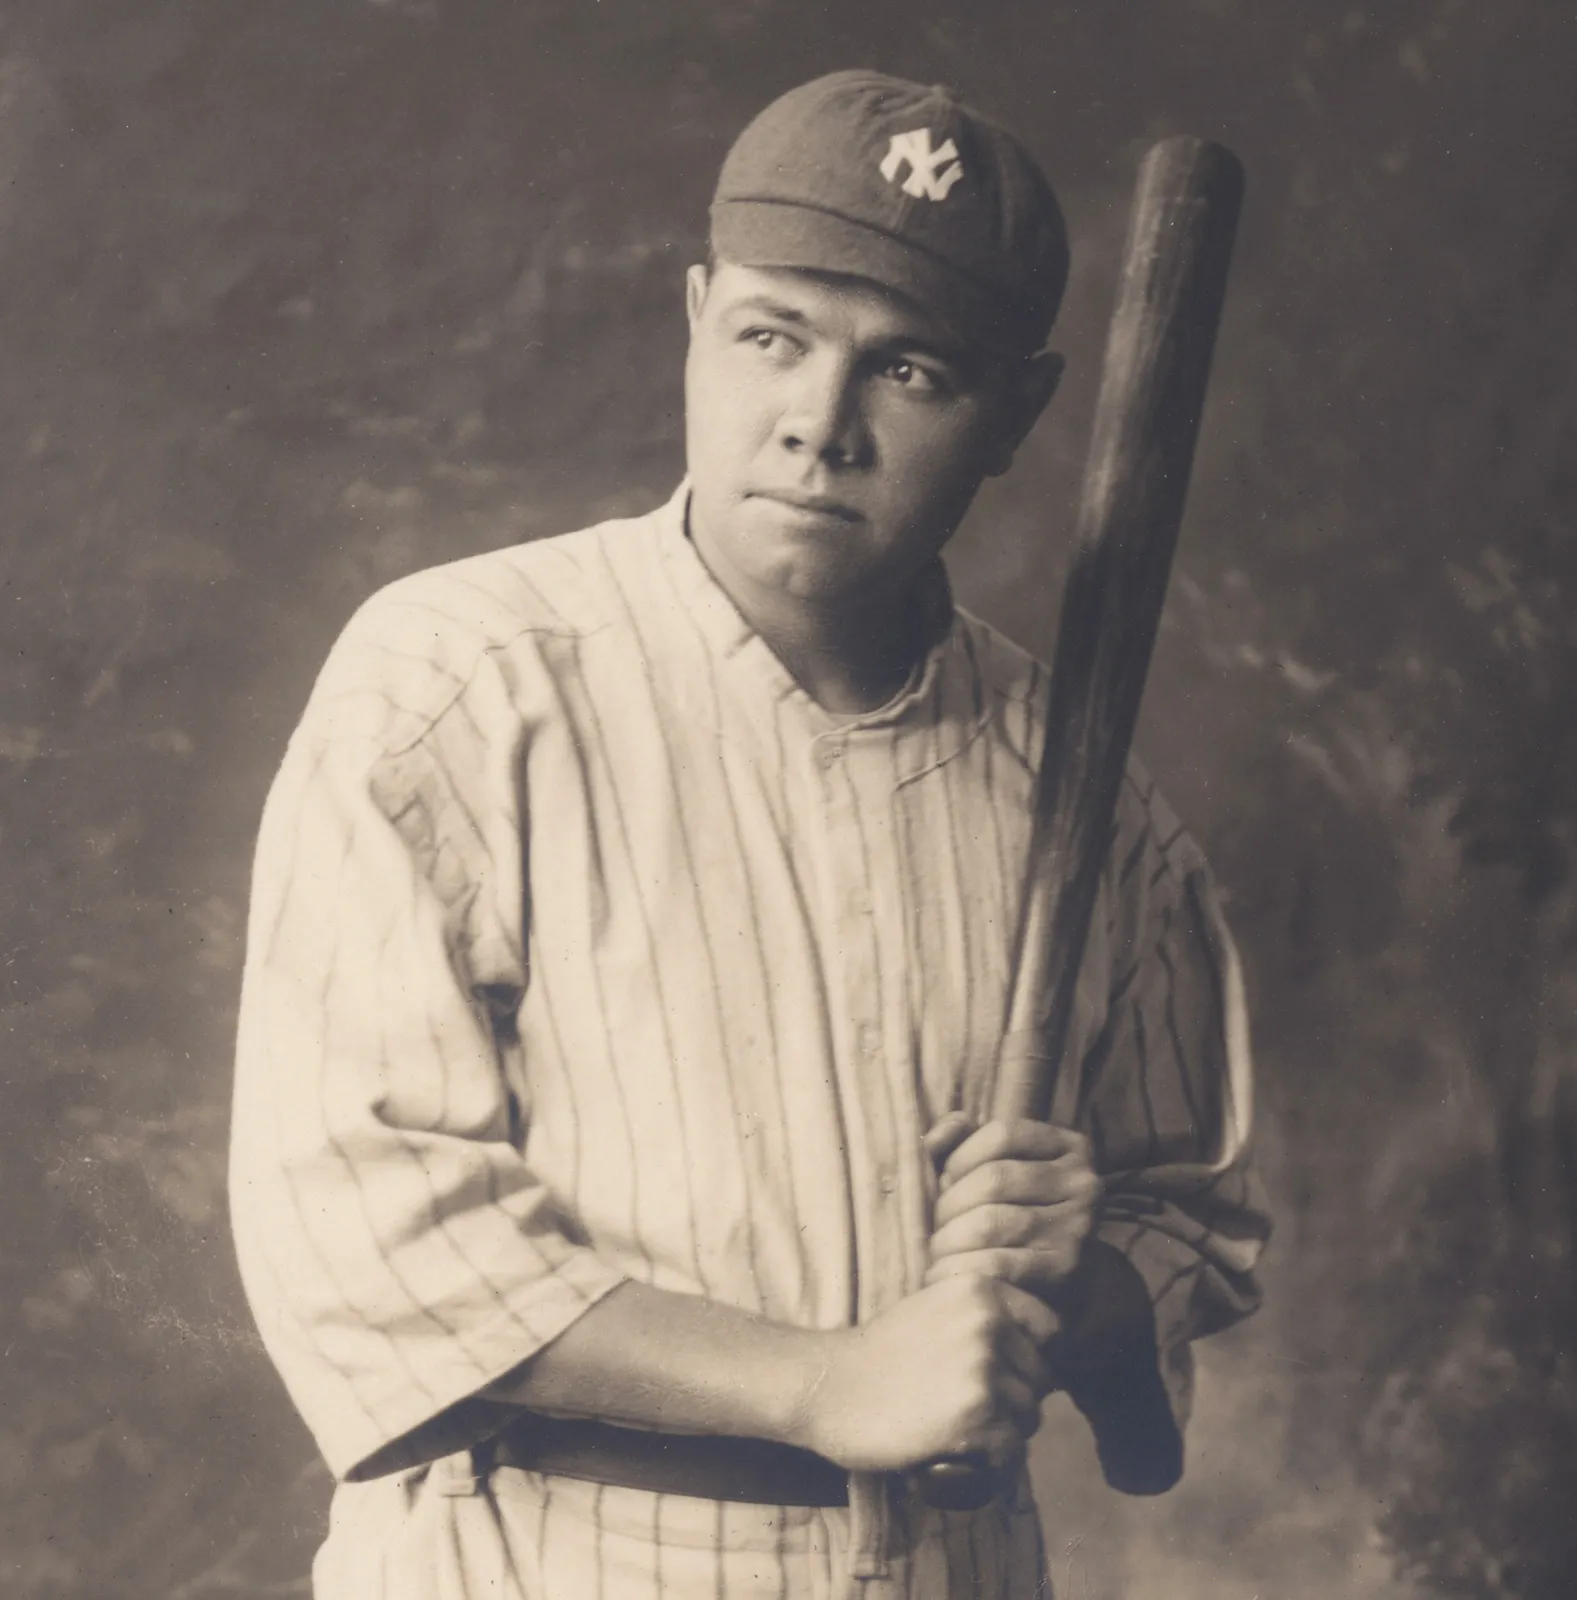 What was Babe Ruth's career-high single-season slugging percentage?